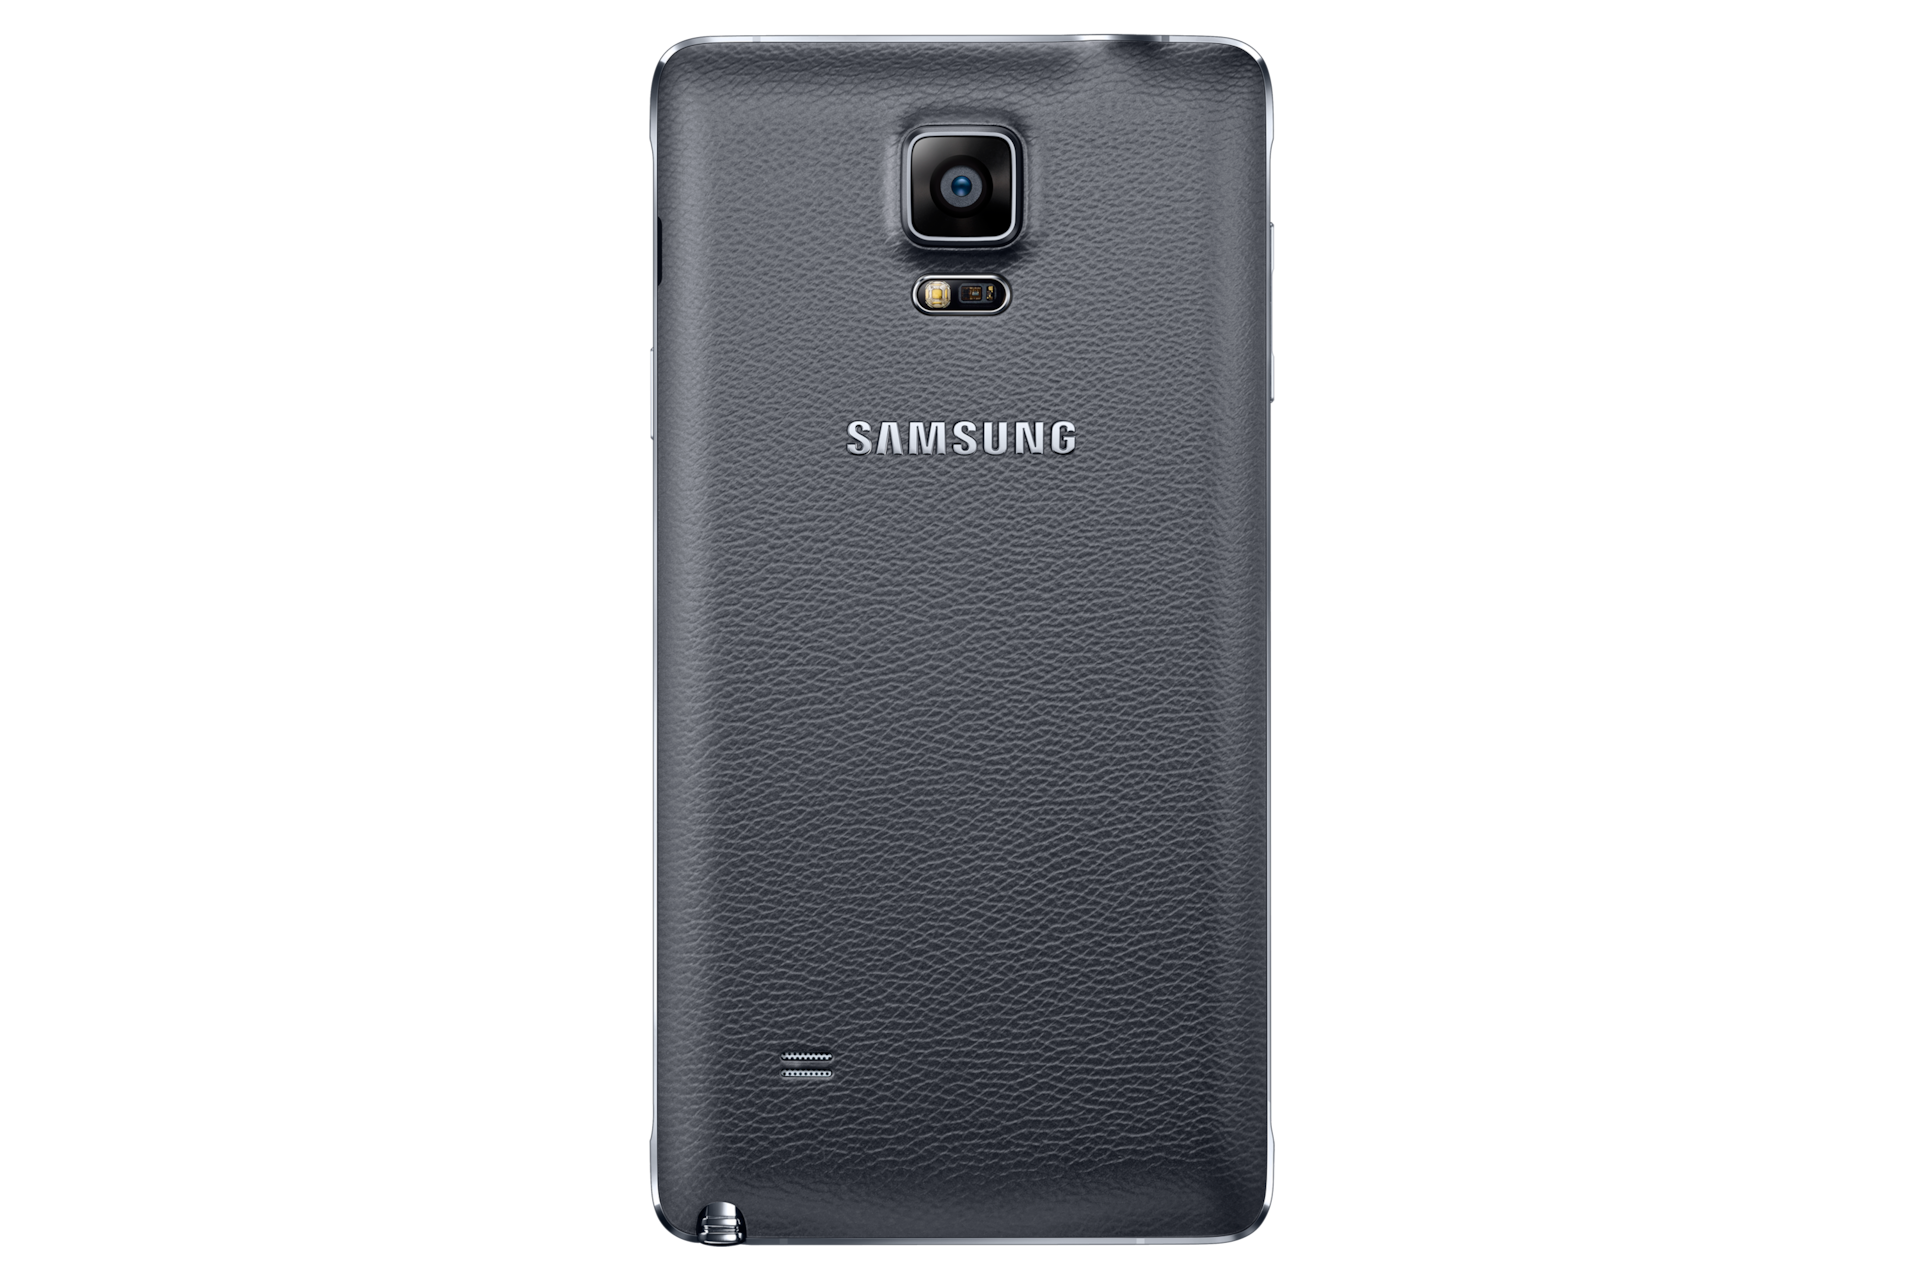 Samsung note 4 купить. Samsung Galaxy Note 4 SM-n910f. Samsung Galaxy Note 4 910f. Samsung Galaxy Note 4 Black. Samsung n910 Galaxy Note 4.